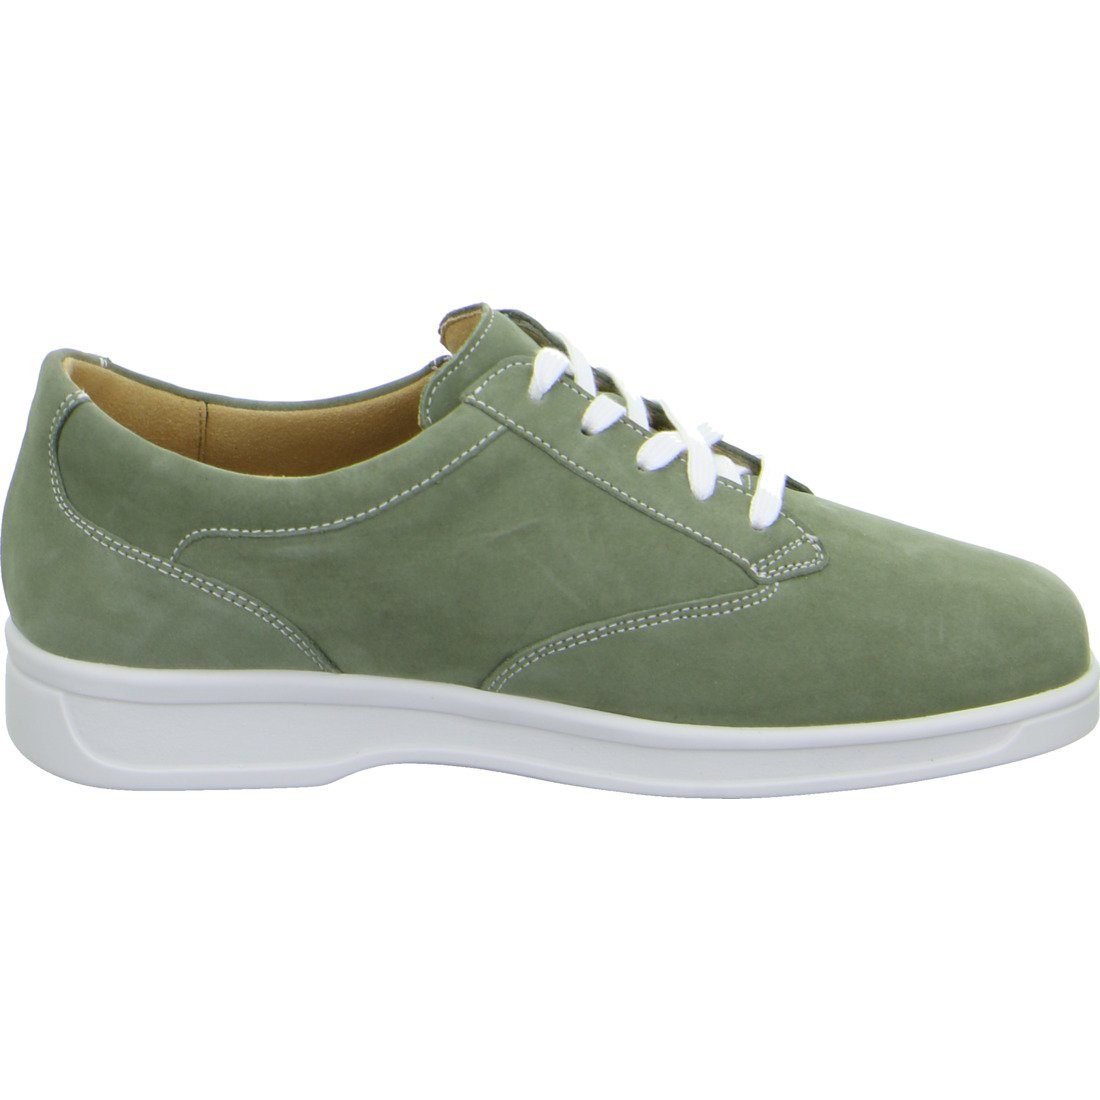 Ganter Ganter Schuhe, Schnürschuh Karin - 048878 Schnürschuh Nubuk Damen grün